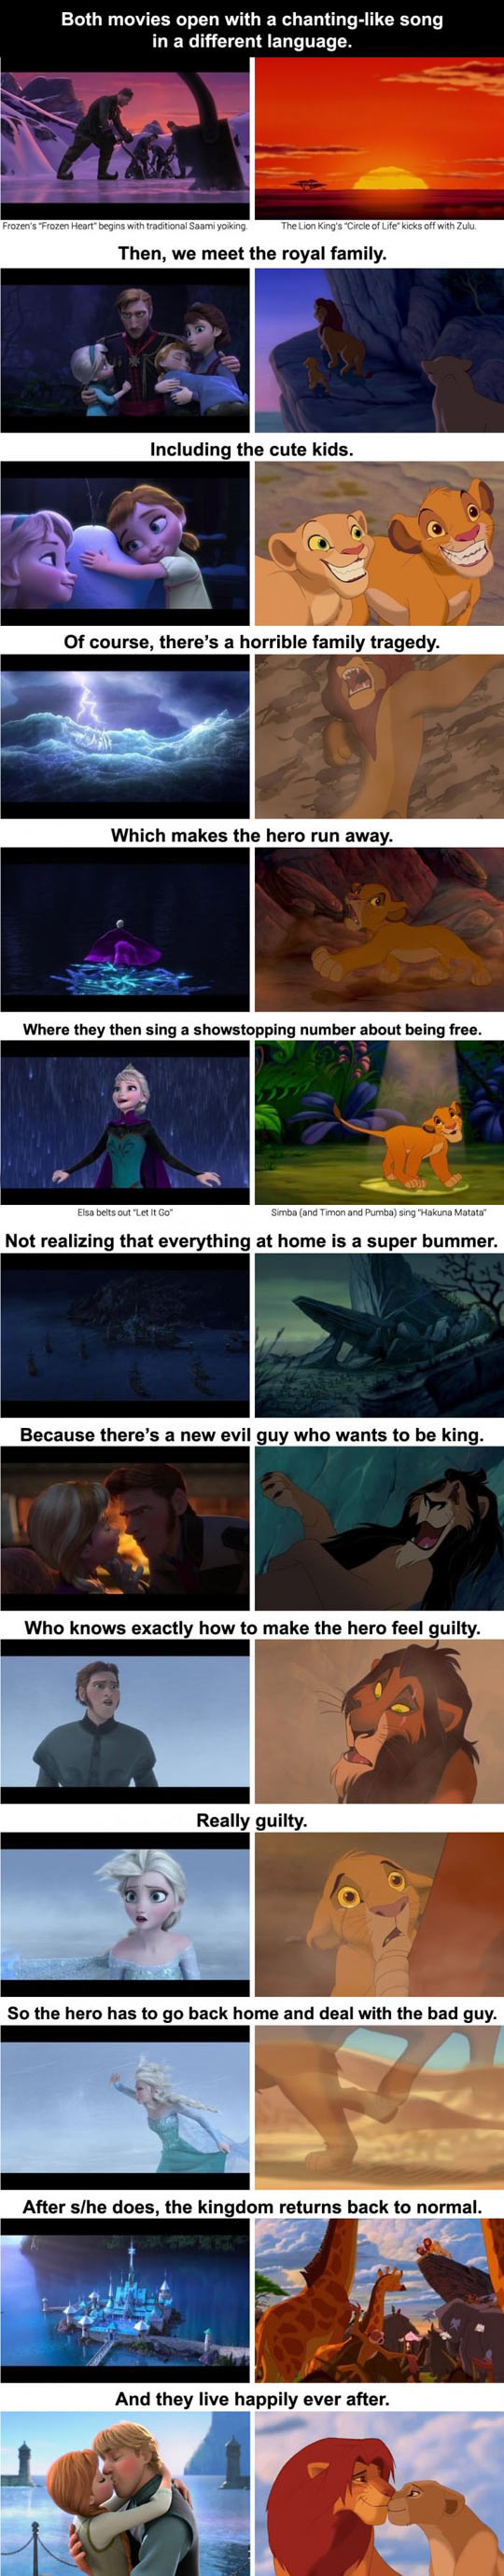 cool-Frozen-Lion-King-same-movie